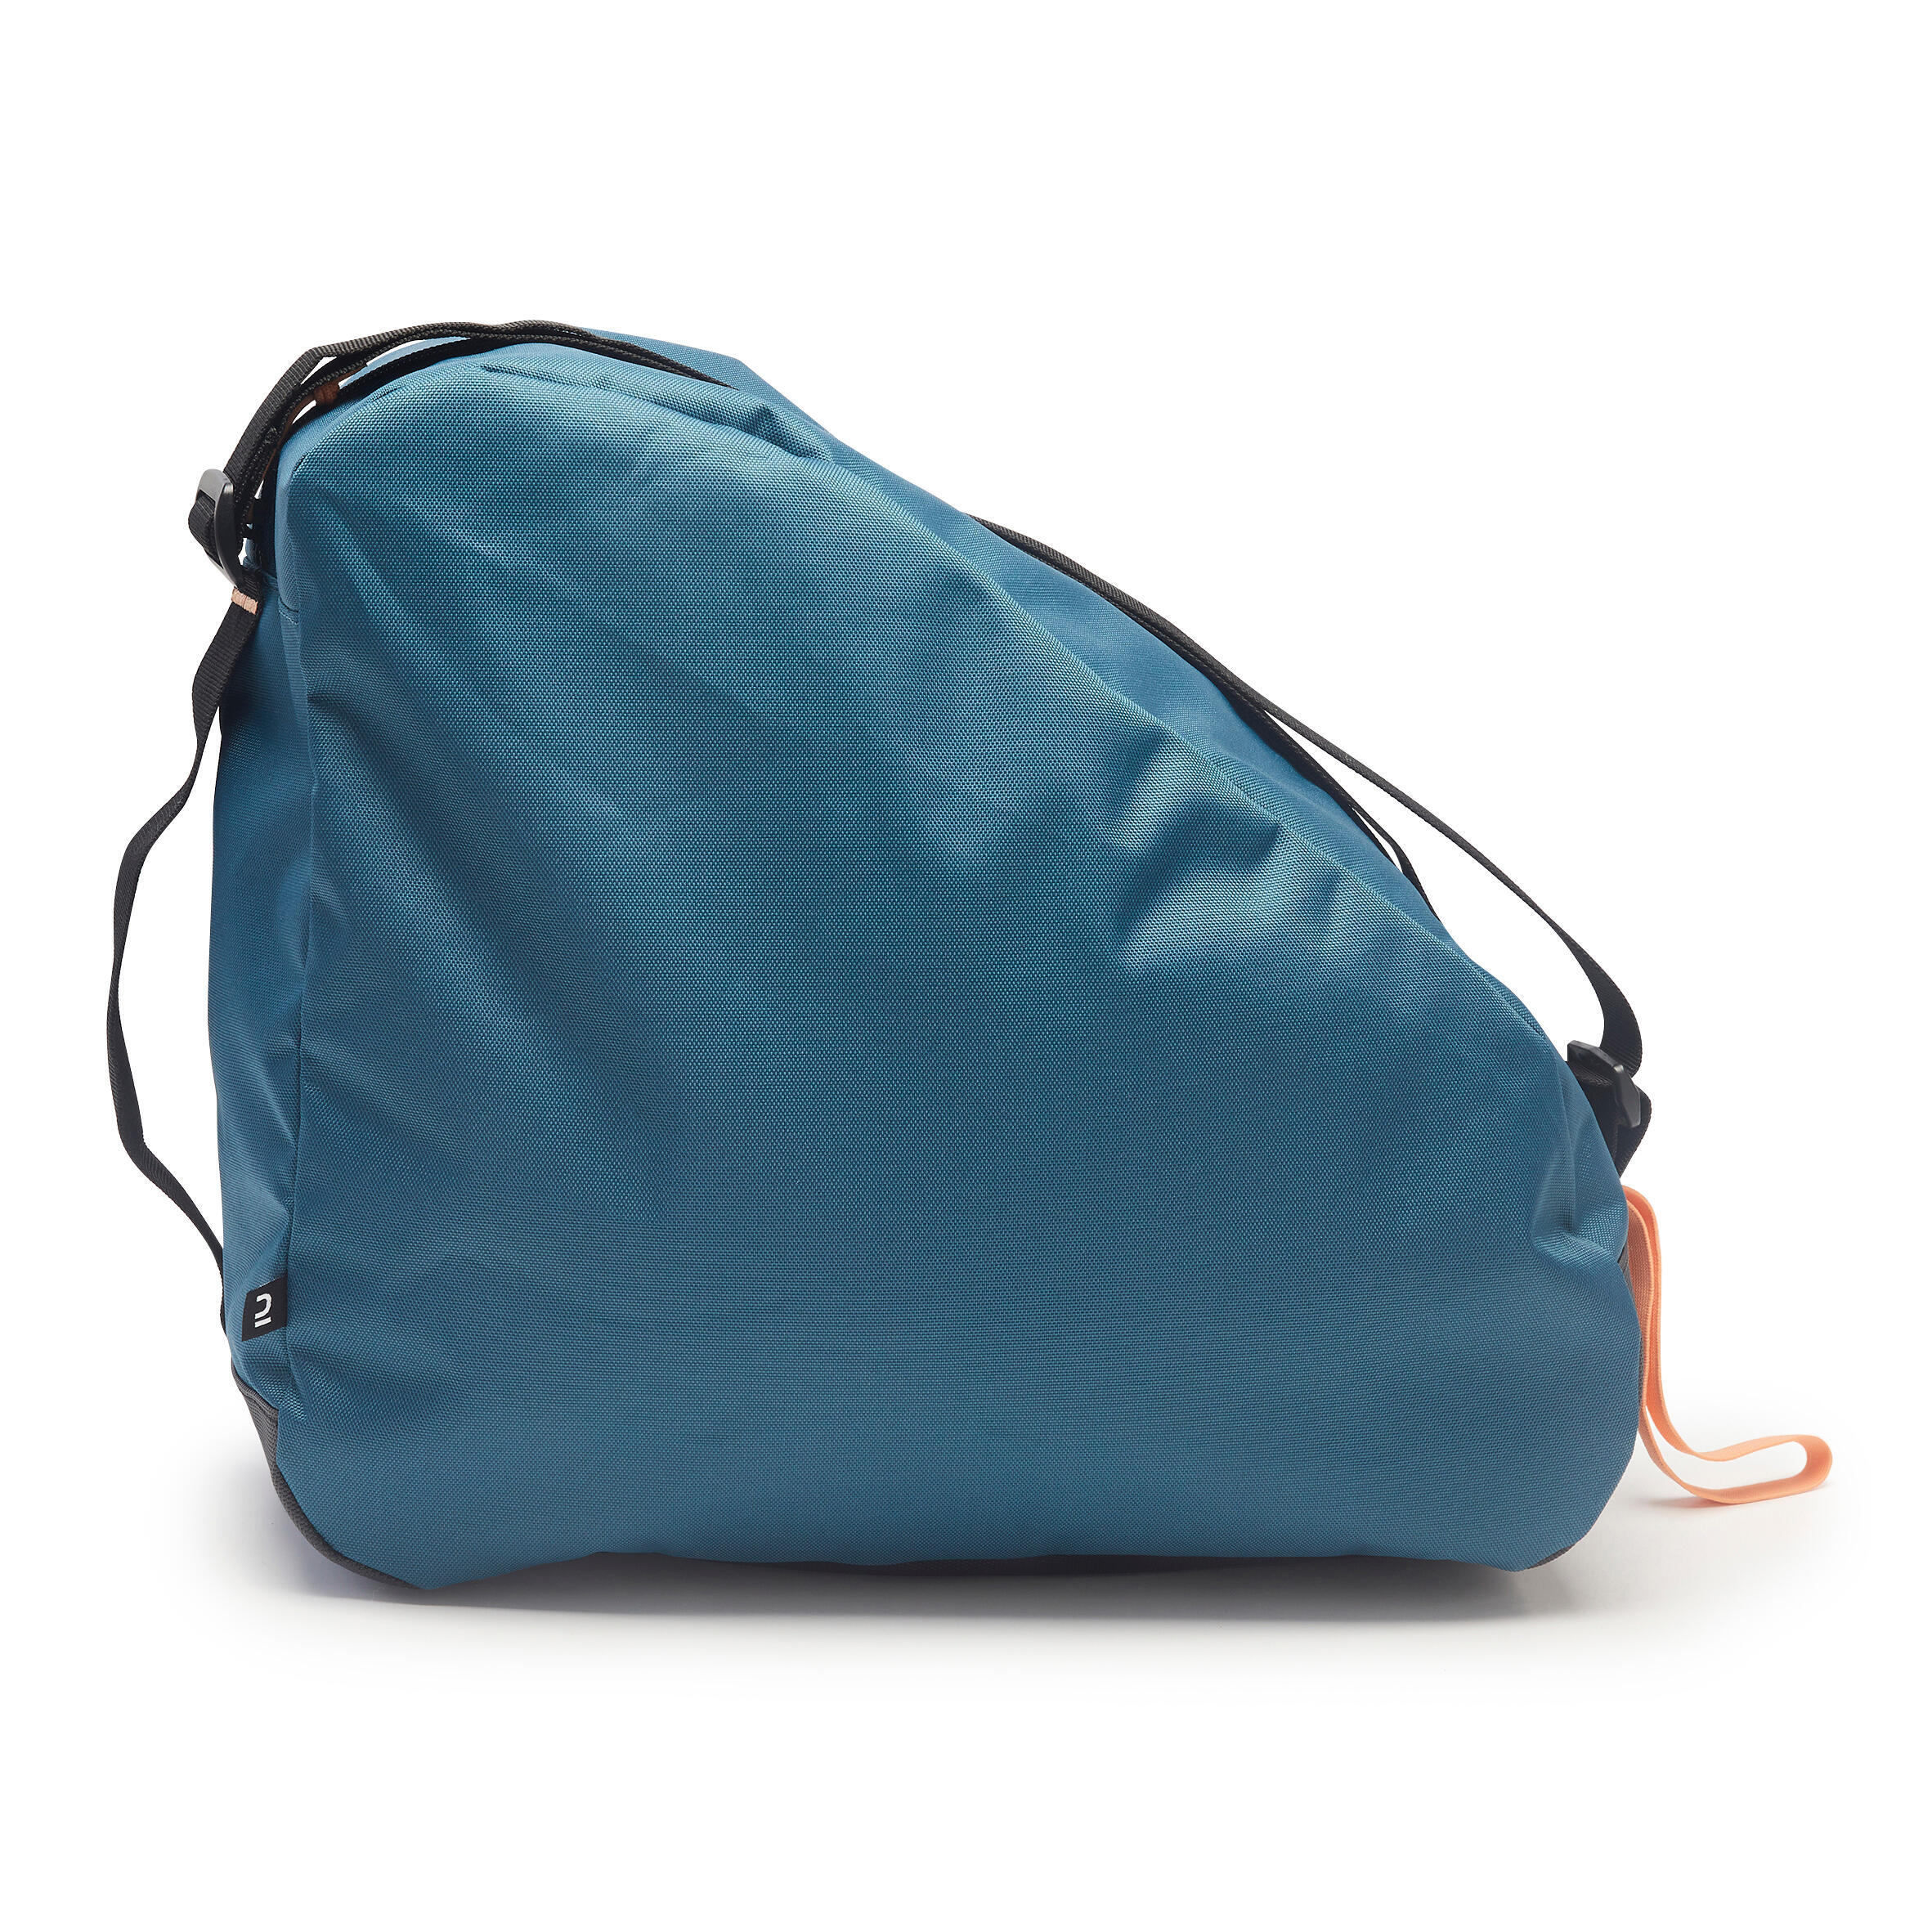 Skate Bag 100 S - Turquoise 4/7